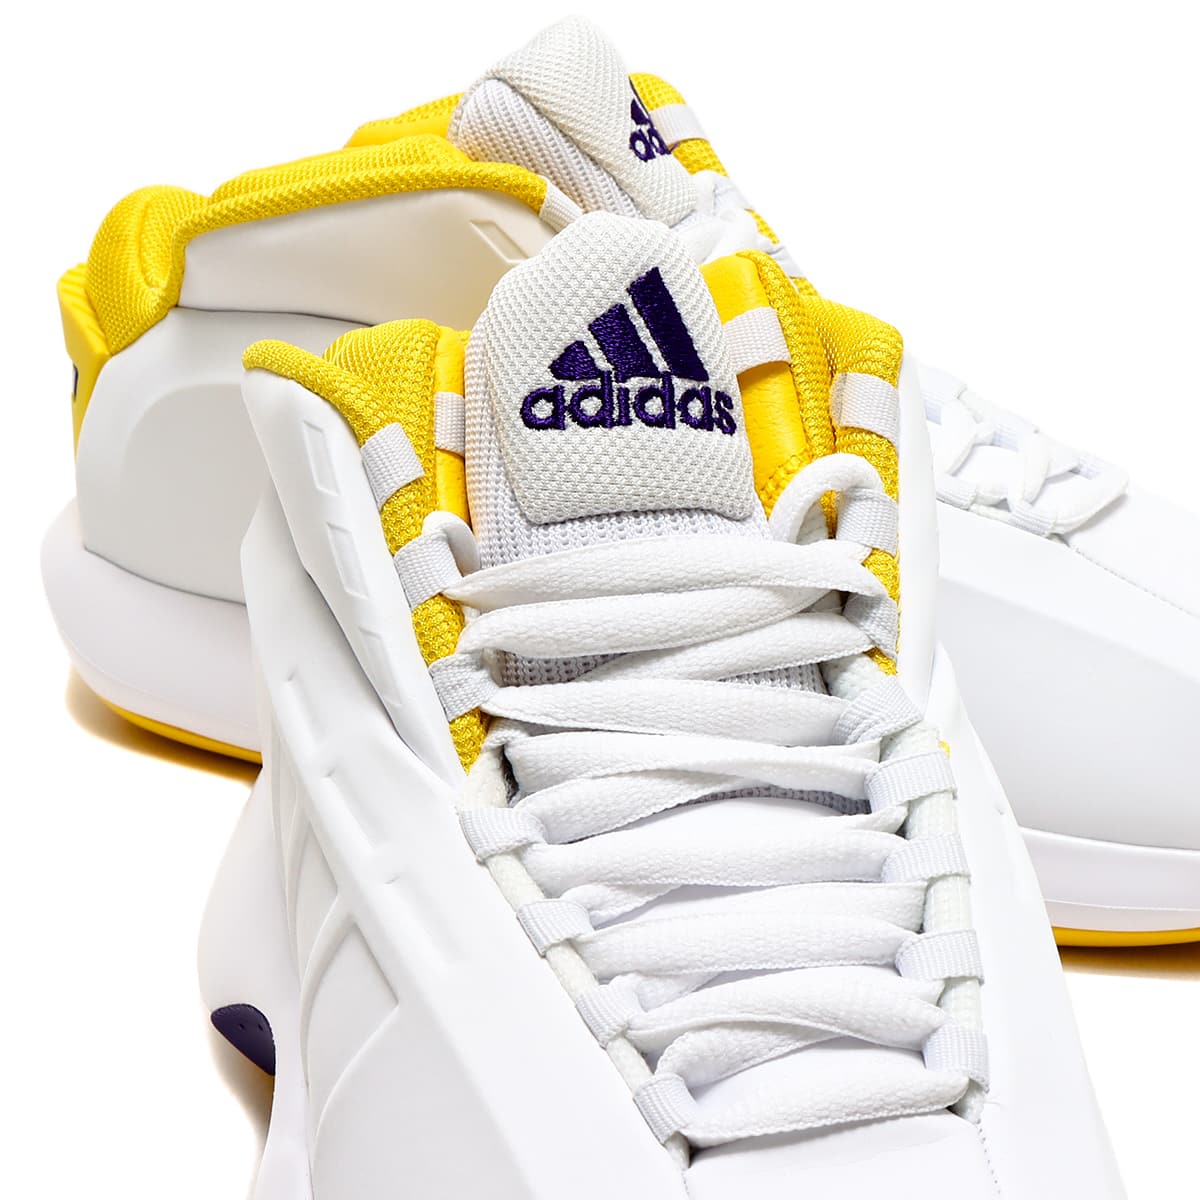 ○送料無料○ Adidas crazy Kobe 27.0cm